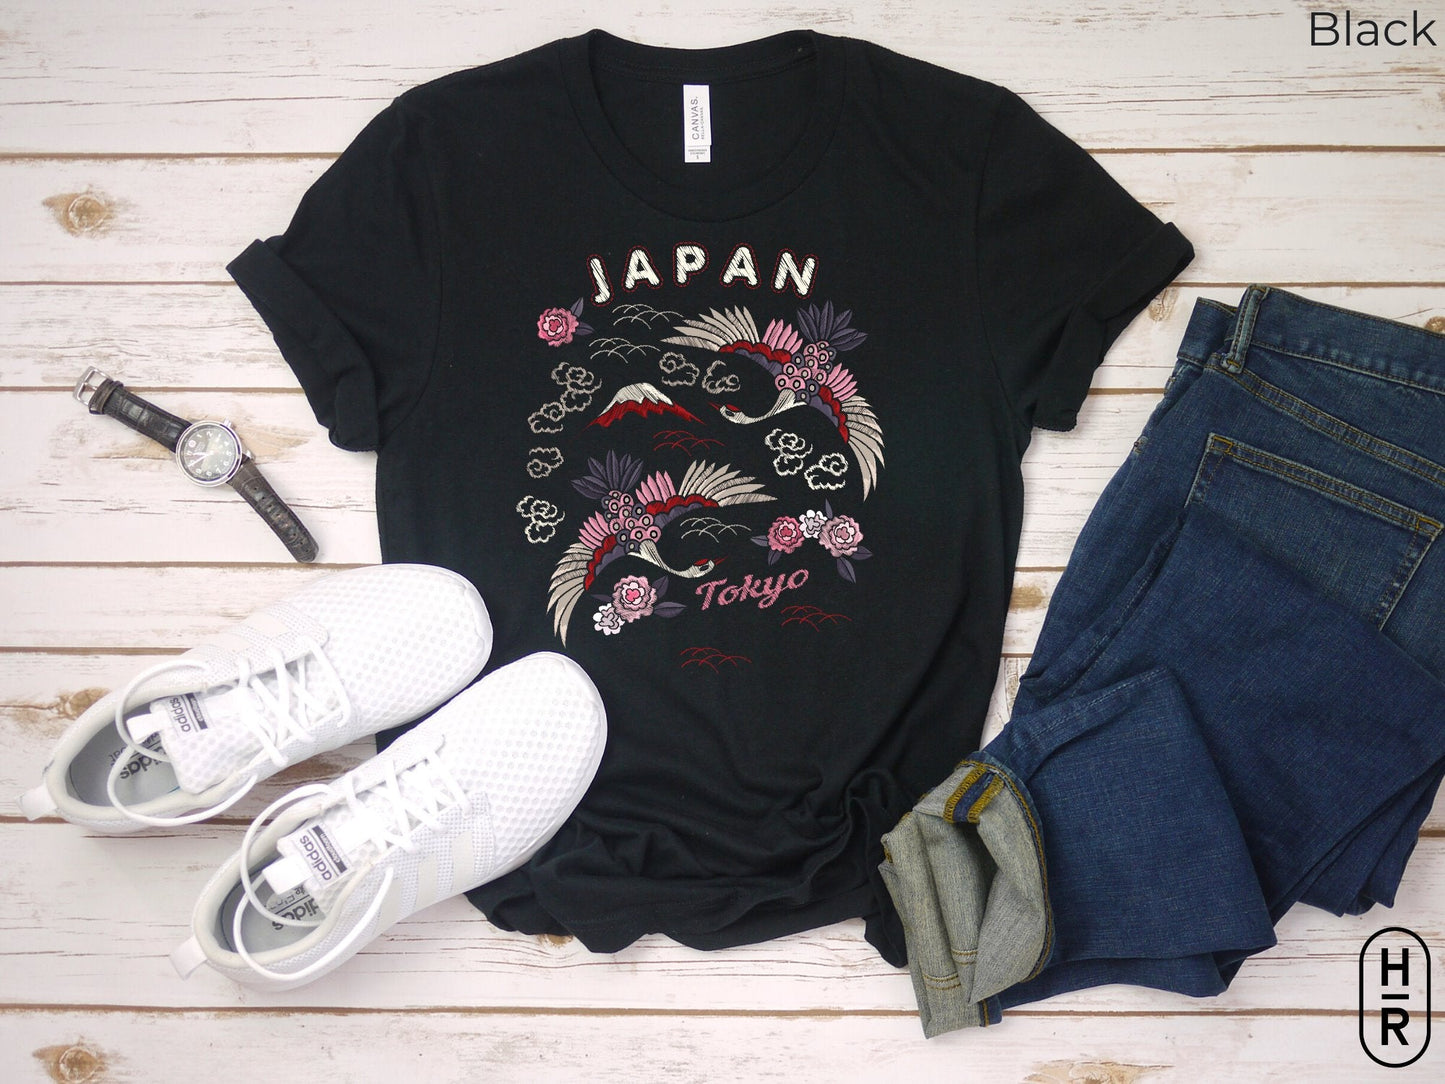 Vintage Style Tokyo Japan T-Shirt